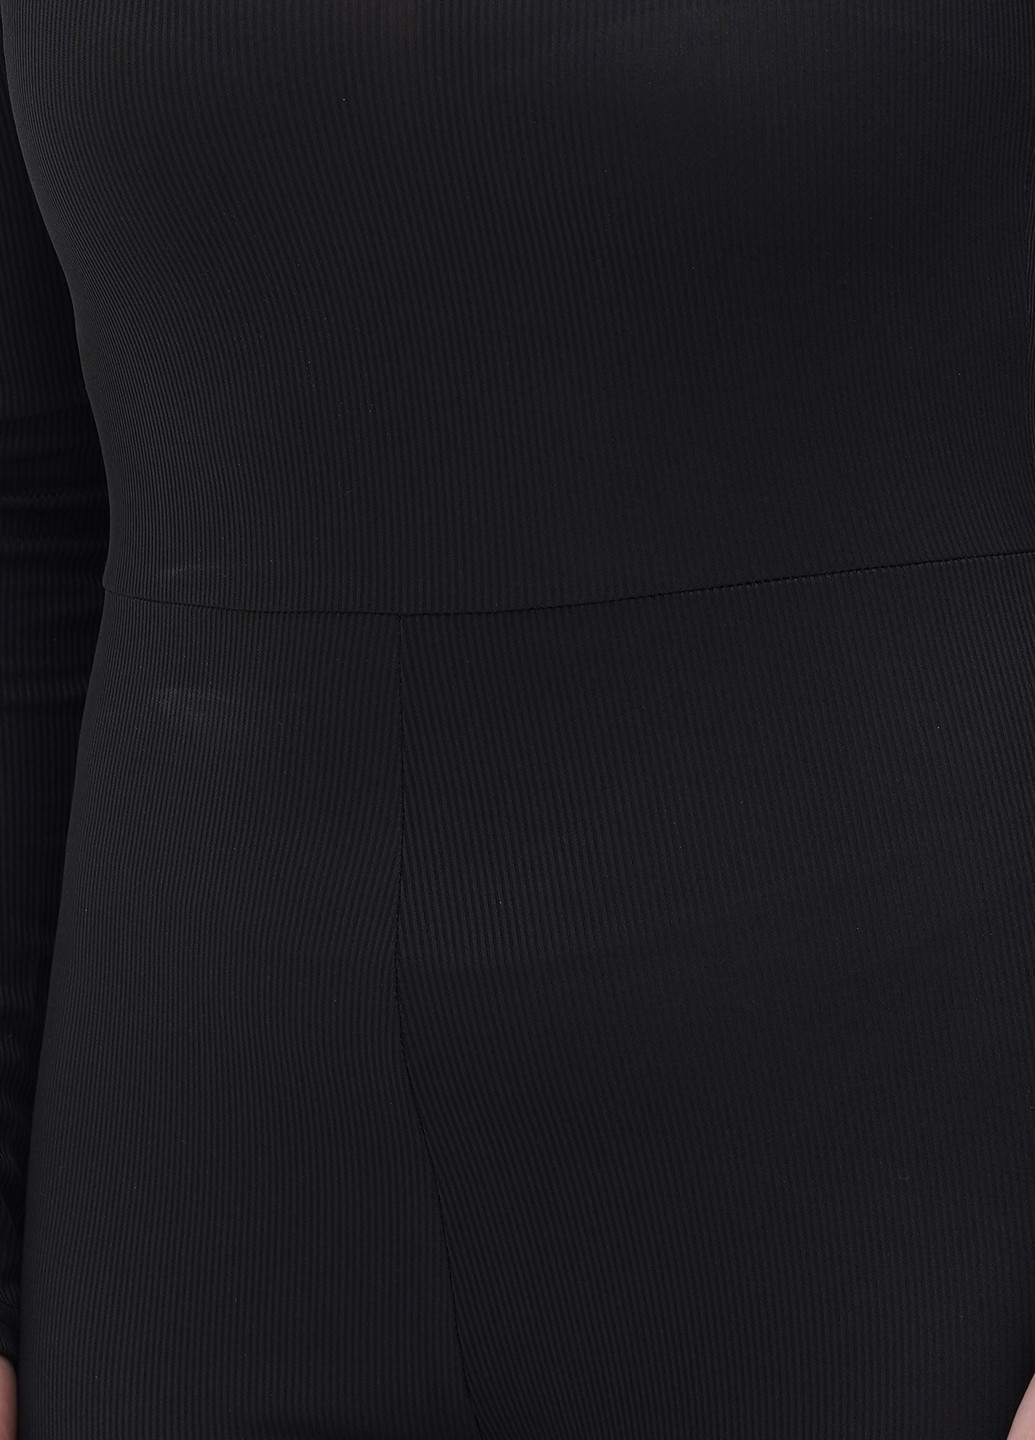 Комбинезон Boohoo комбинезон-брюки однотонный чёрный кэжуал полиэстер